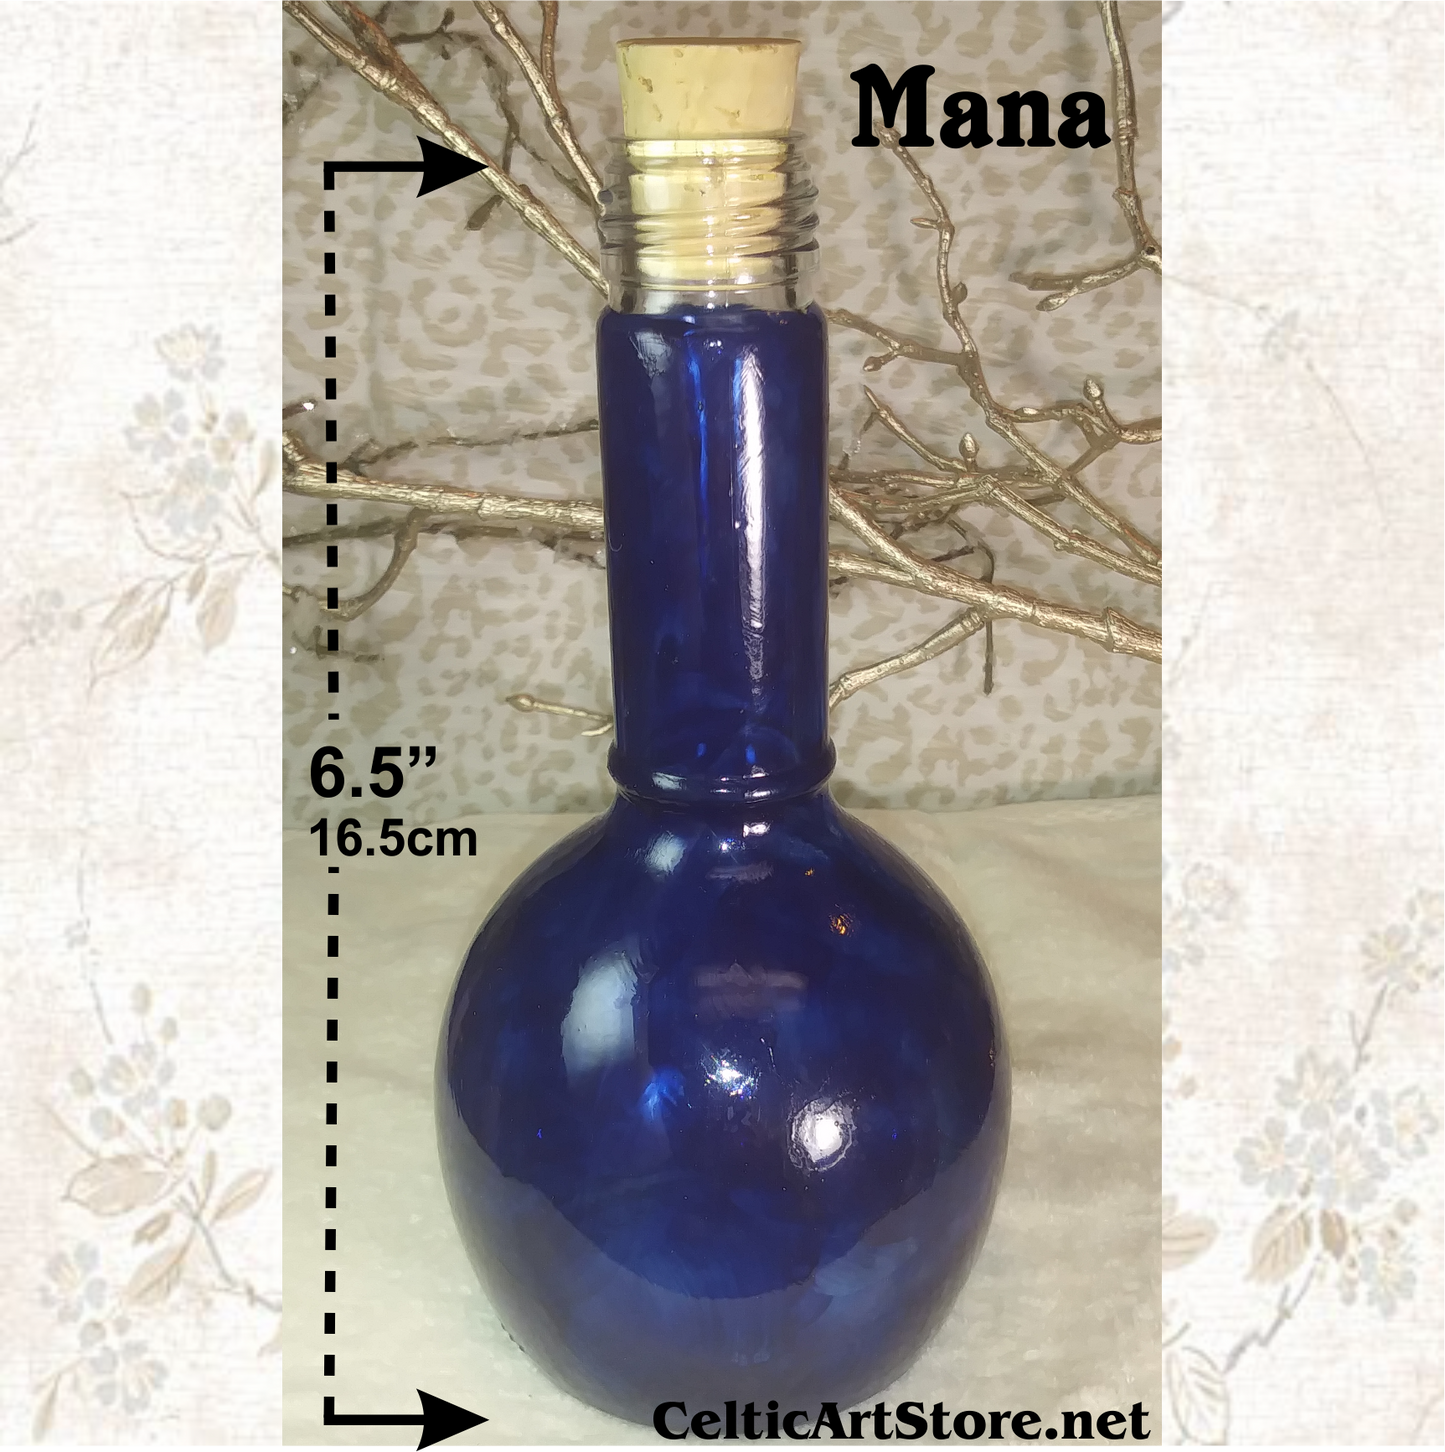 MANA Potion Bottle